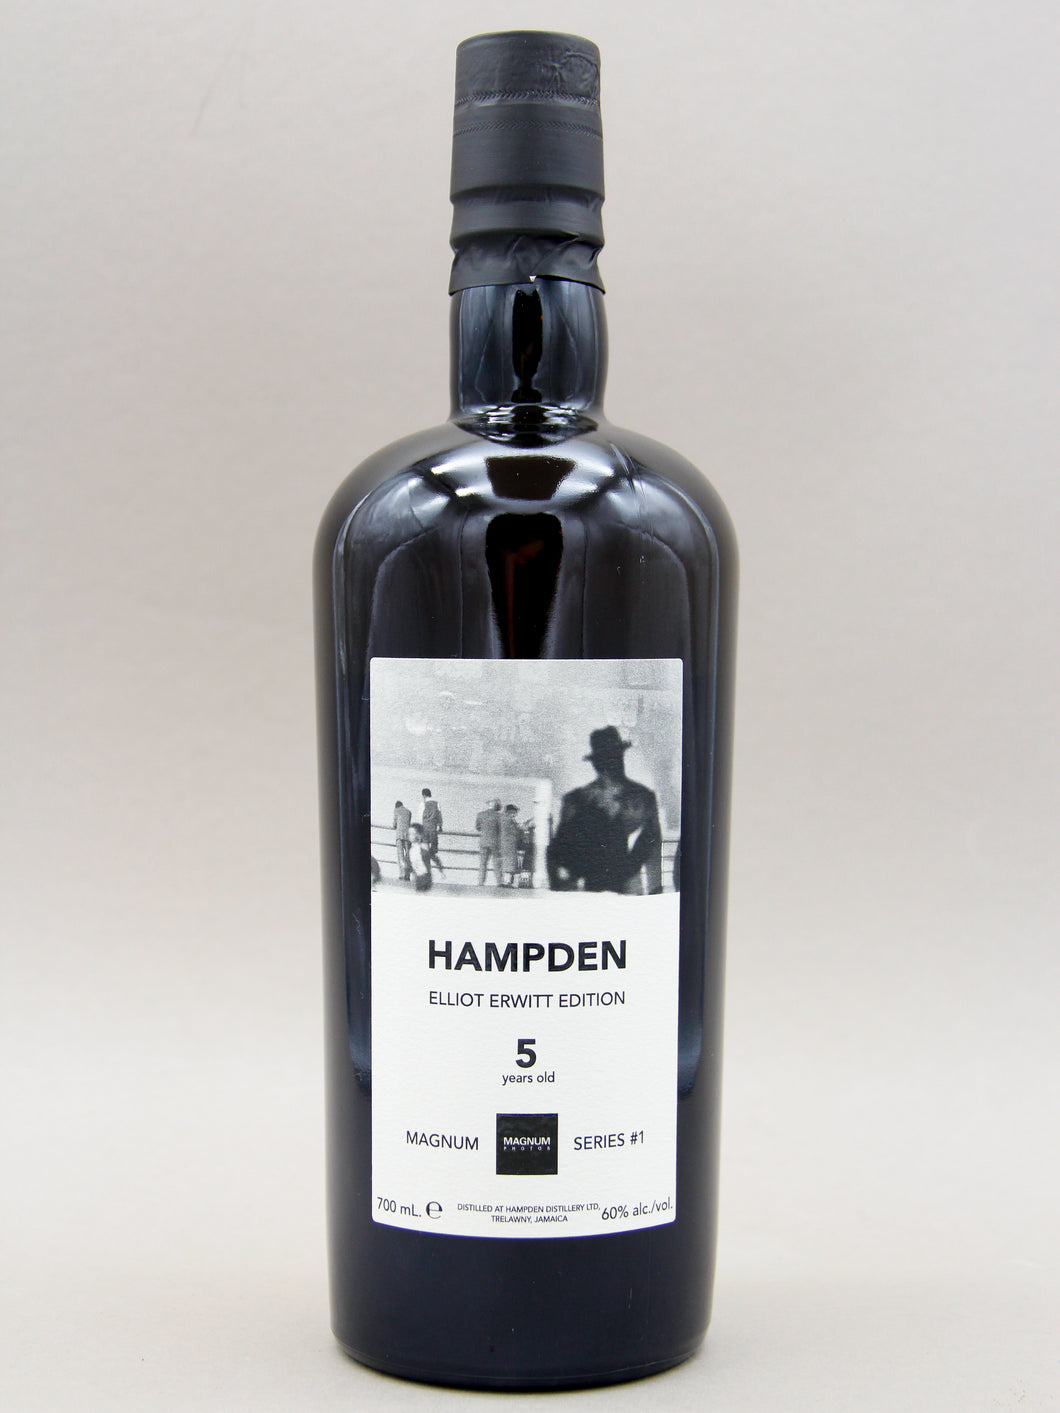 Hampden Pure Single Rum, 5 Years Old, Elliott Erwitt Edition, Magnum Series #1, Jamaica, 2016 (60%, 70cl)